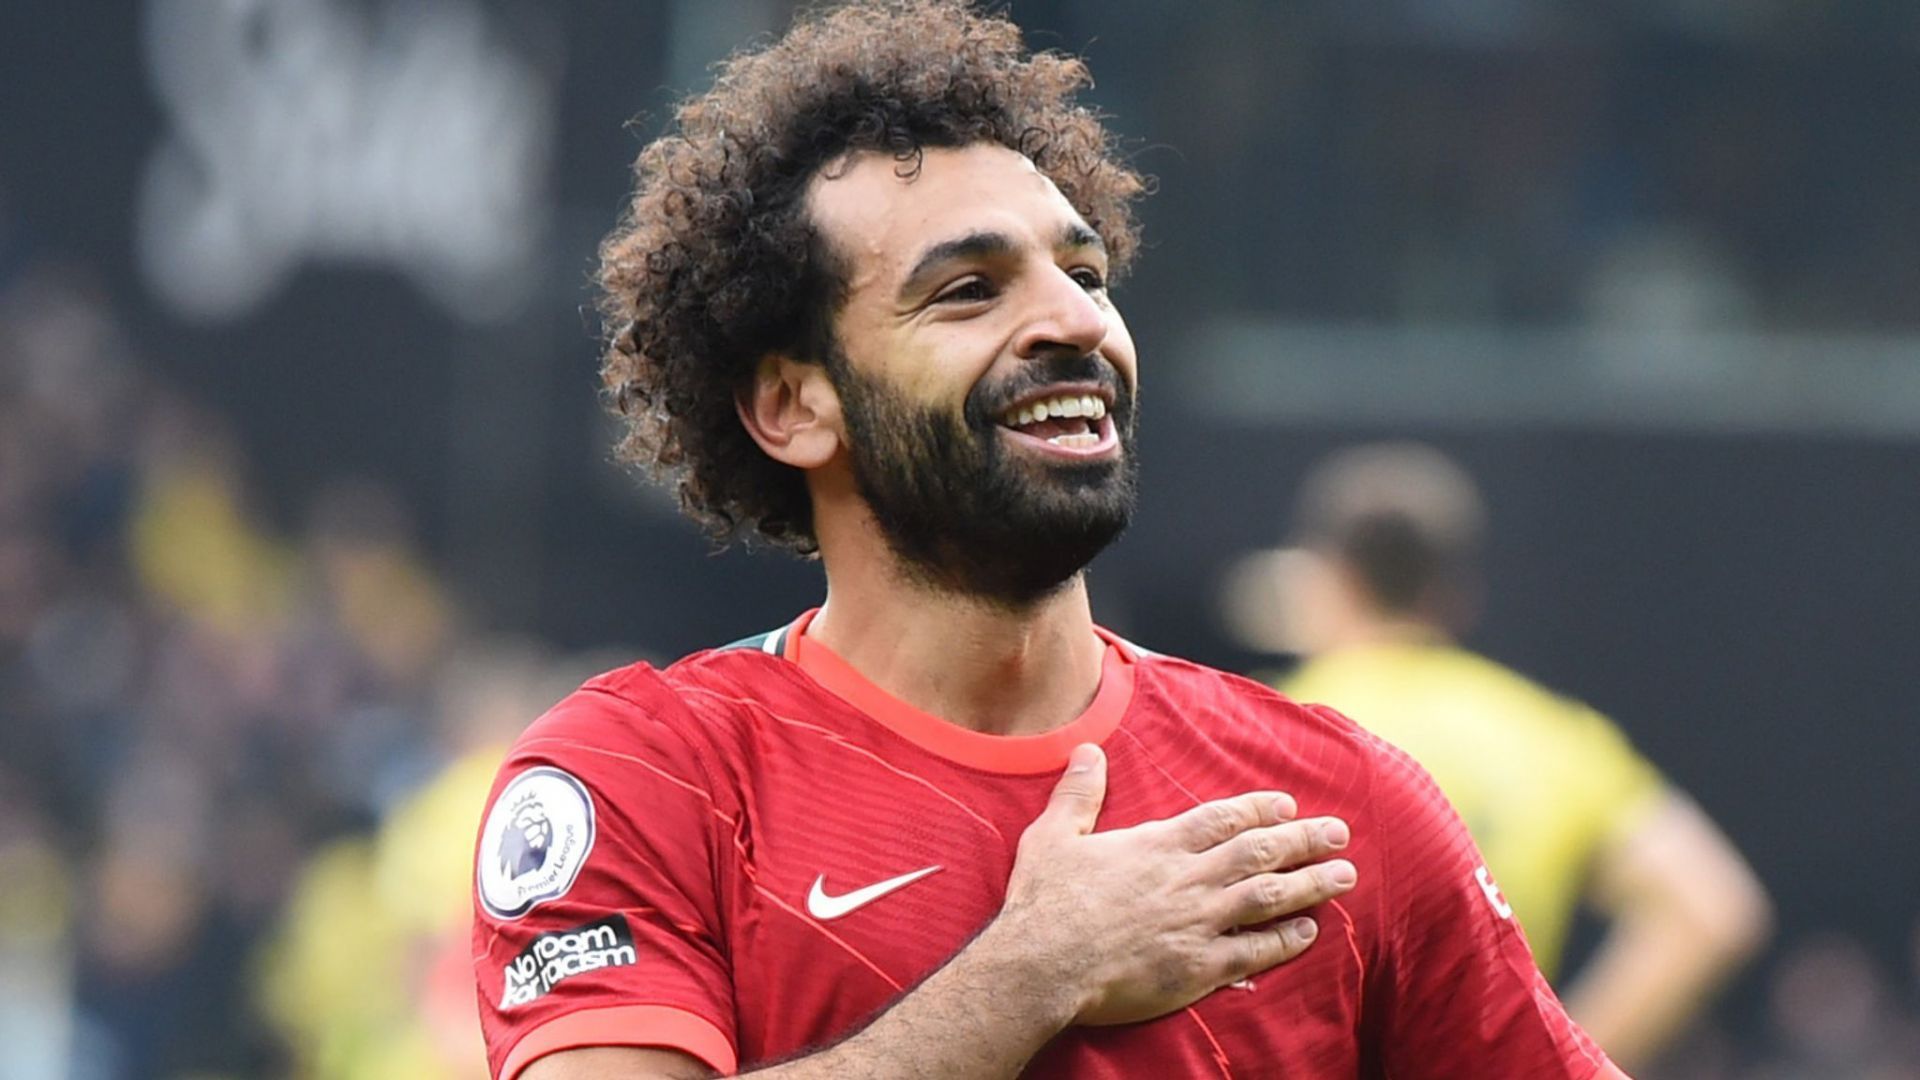 Mohamed Salah celebrating scoring a goal for Liverpool in the Premier League.